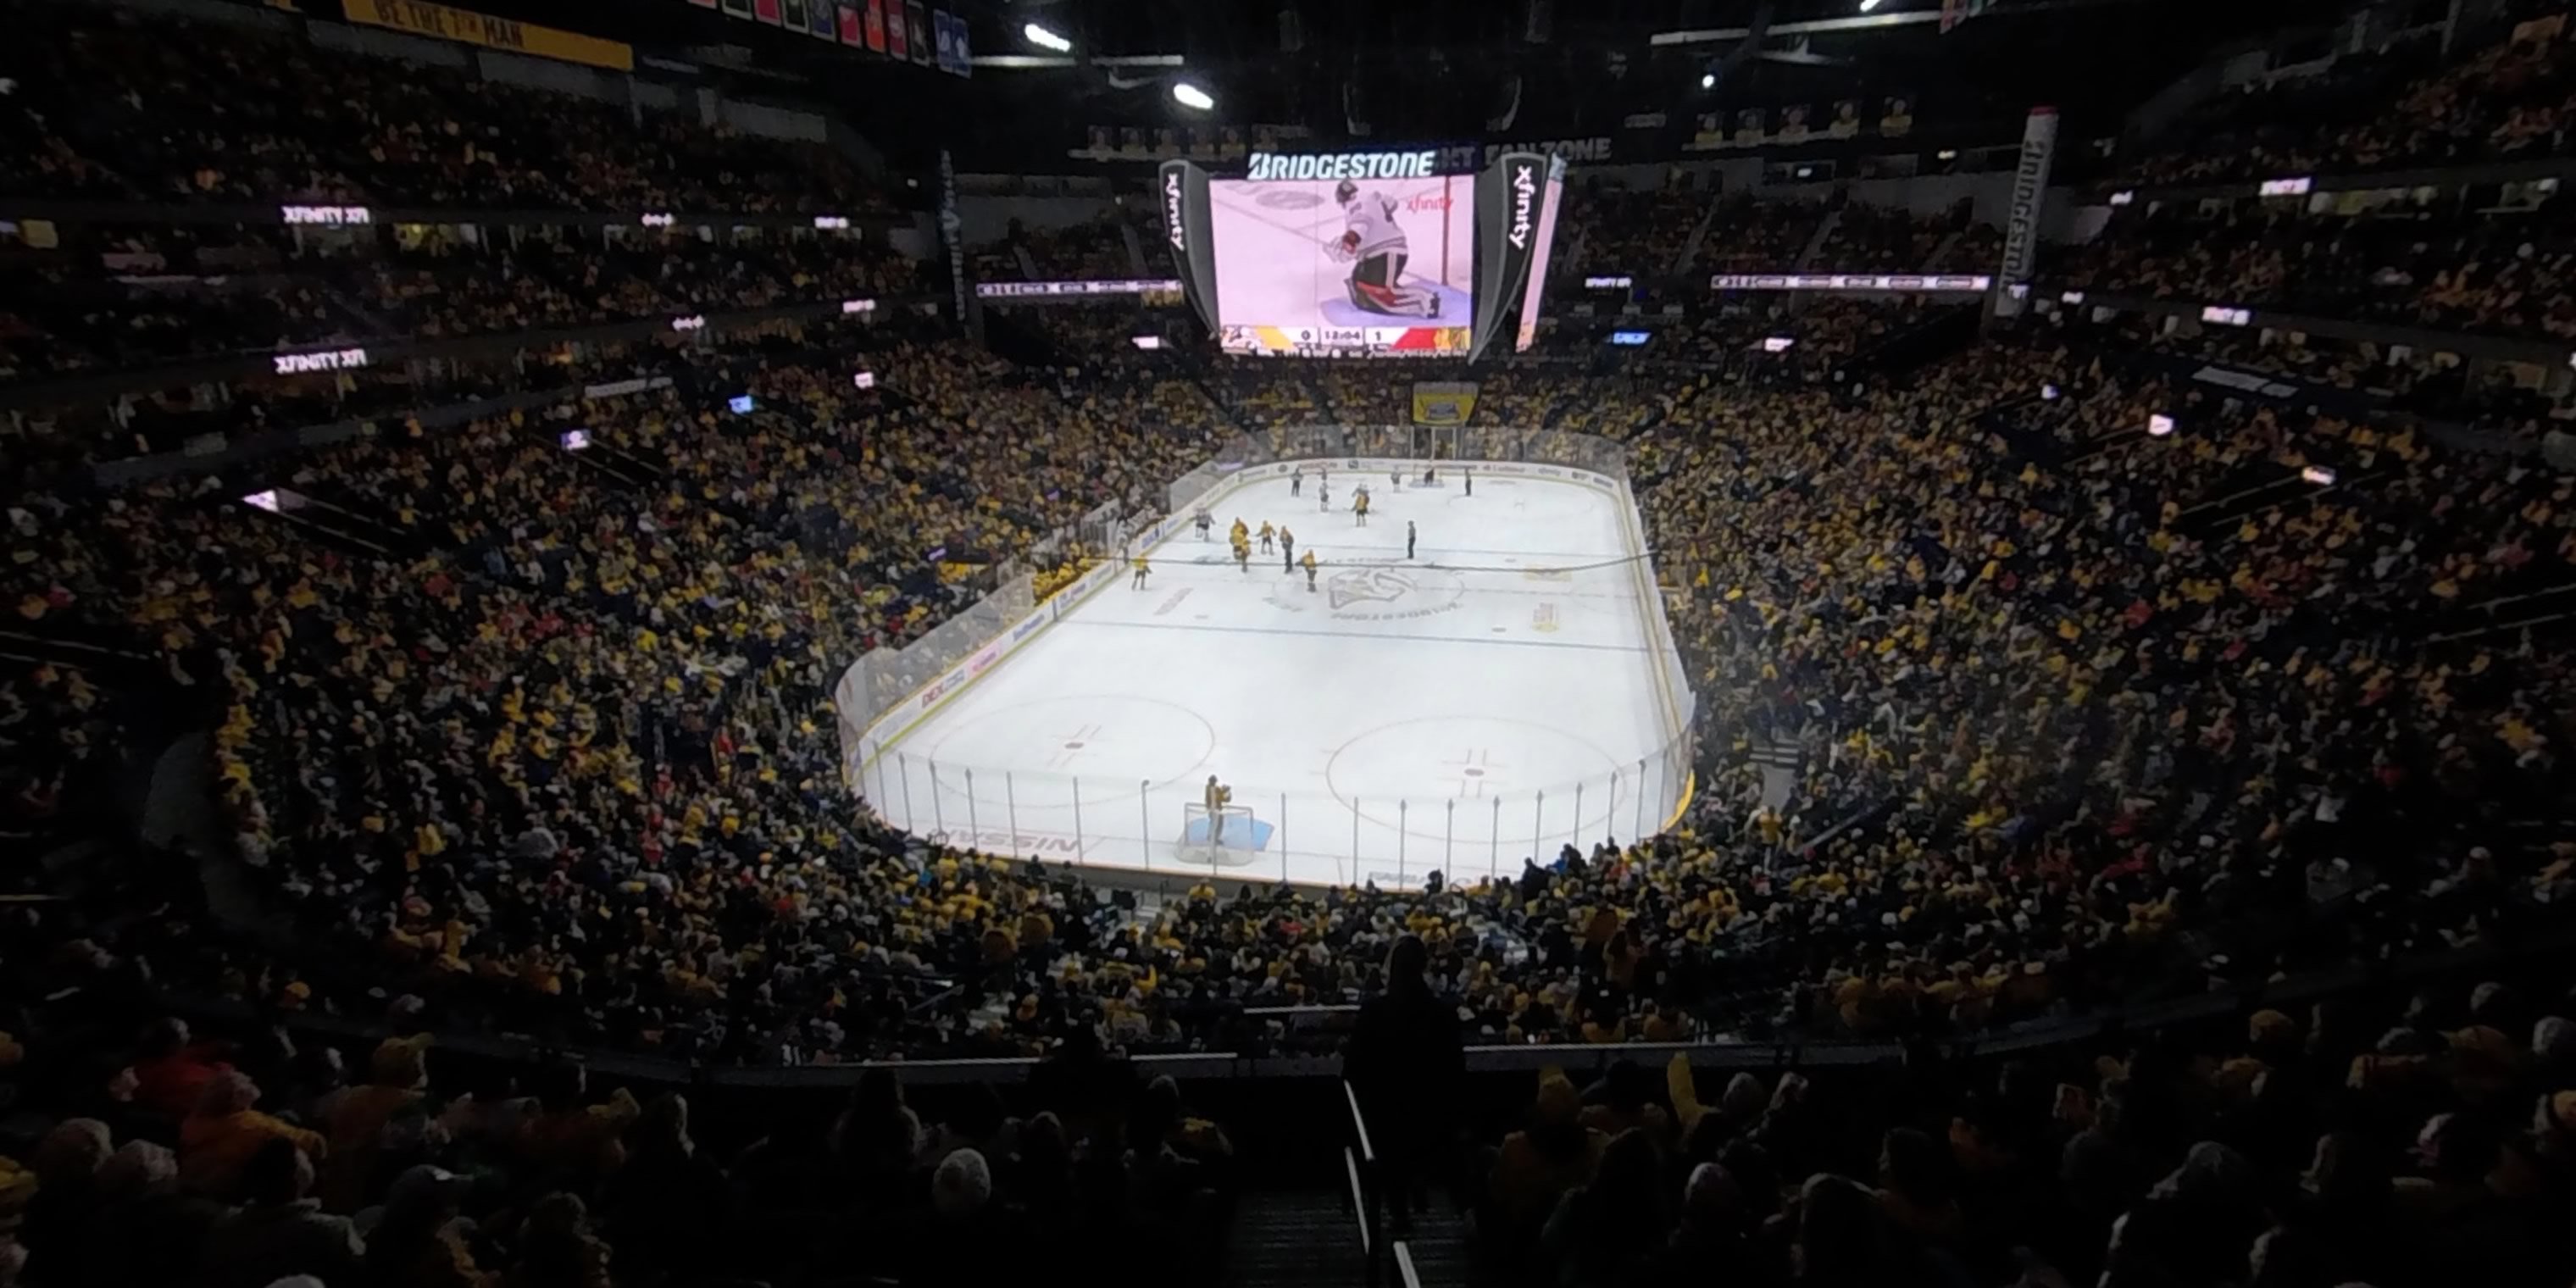 section 201 panoramic seat view  for hockey - bridgestone arena